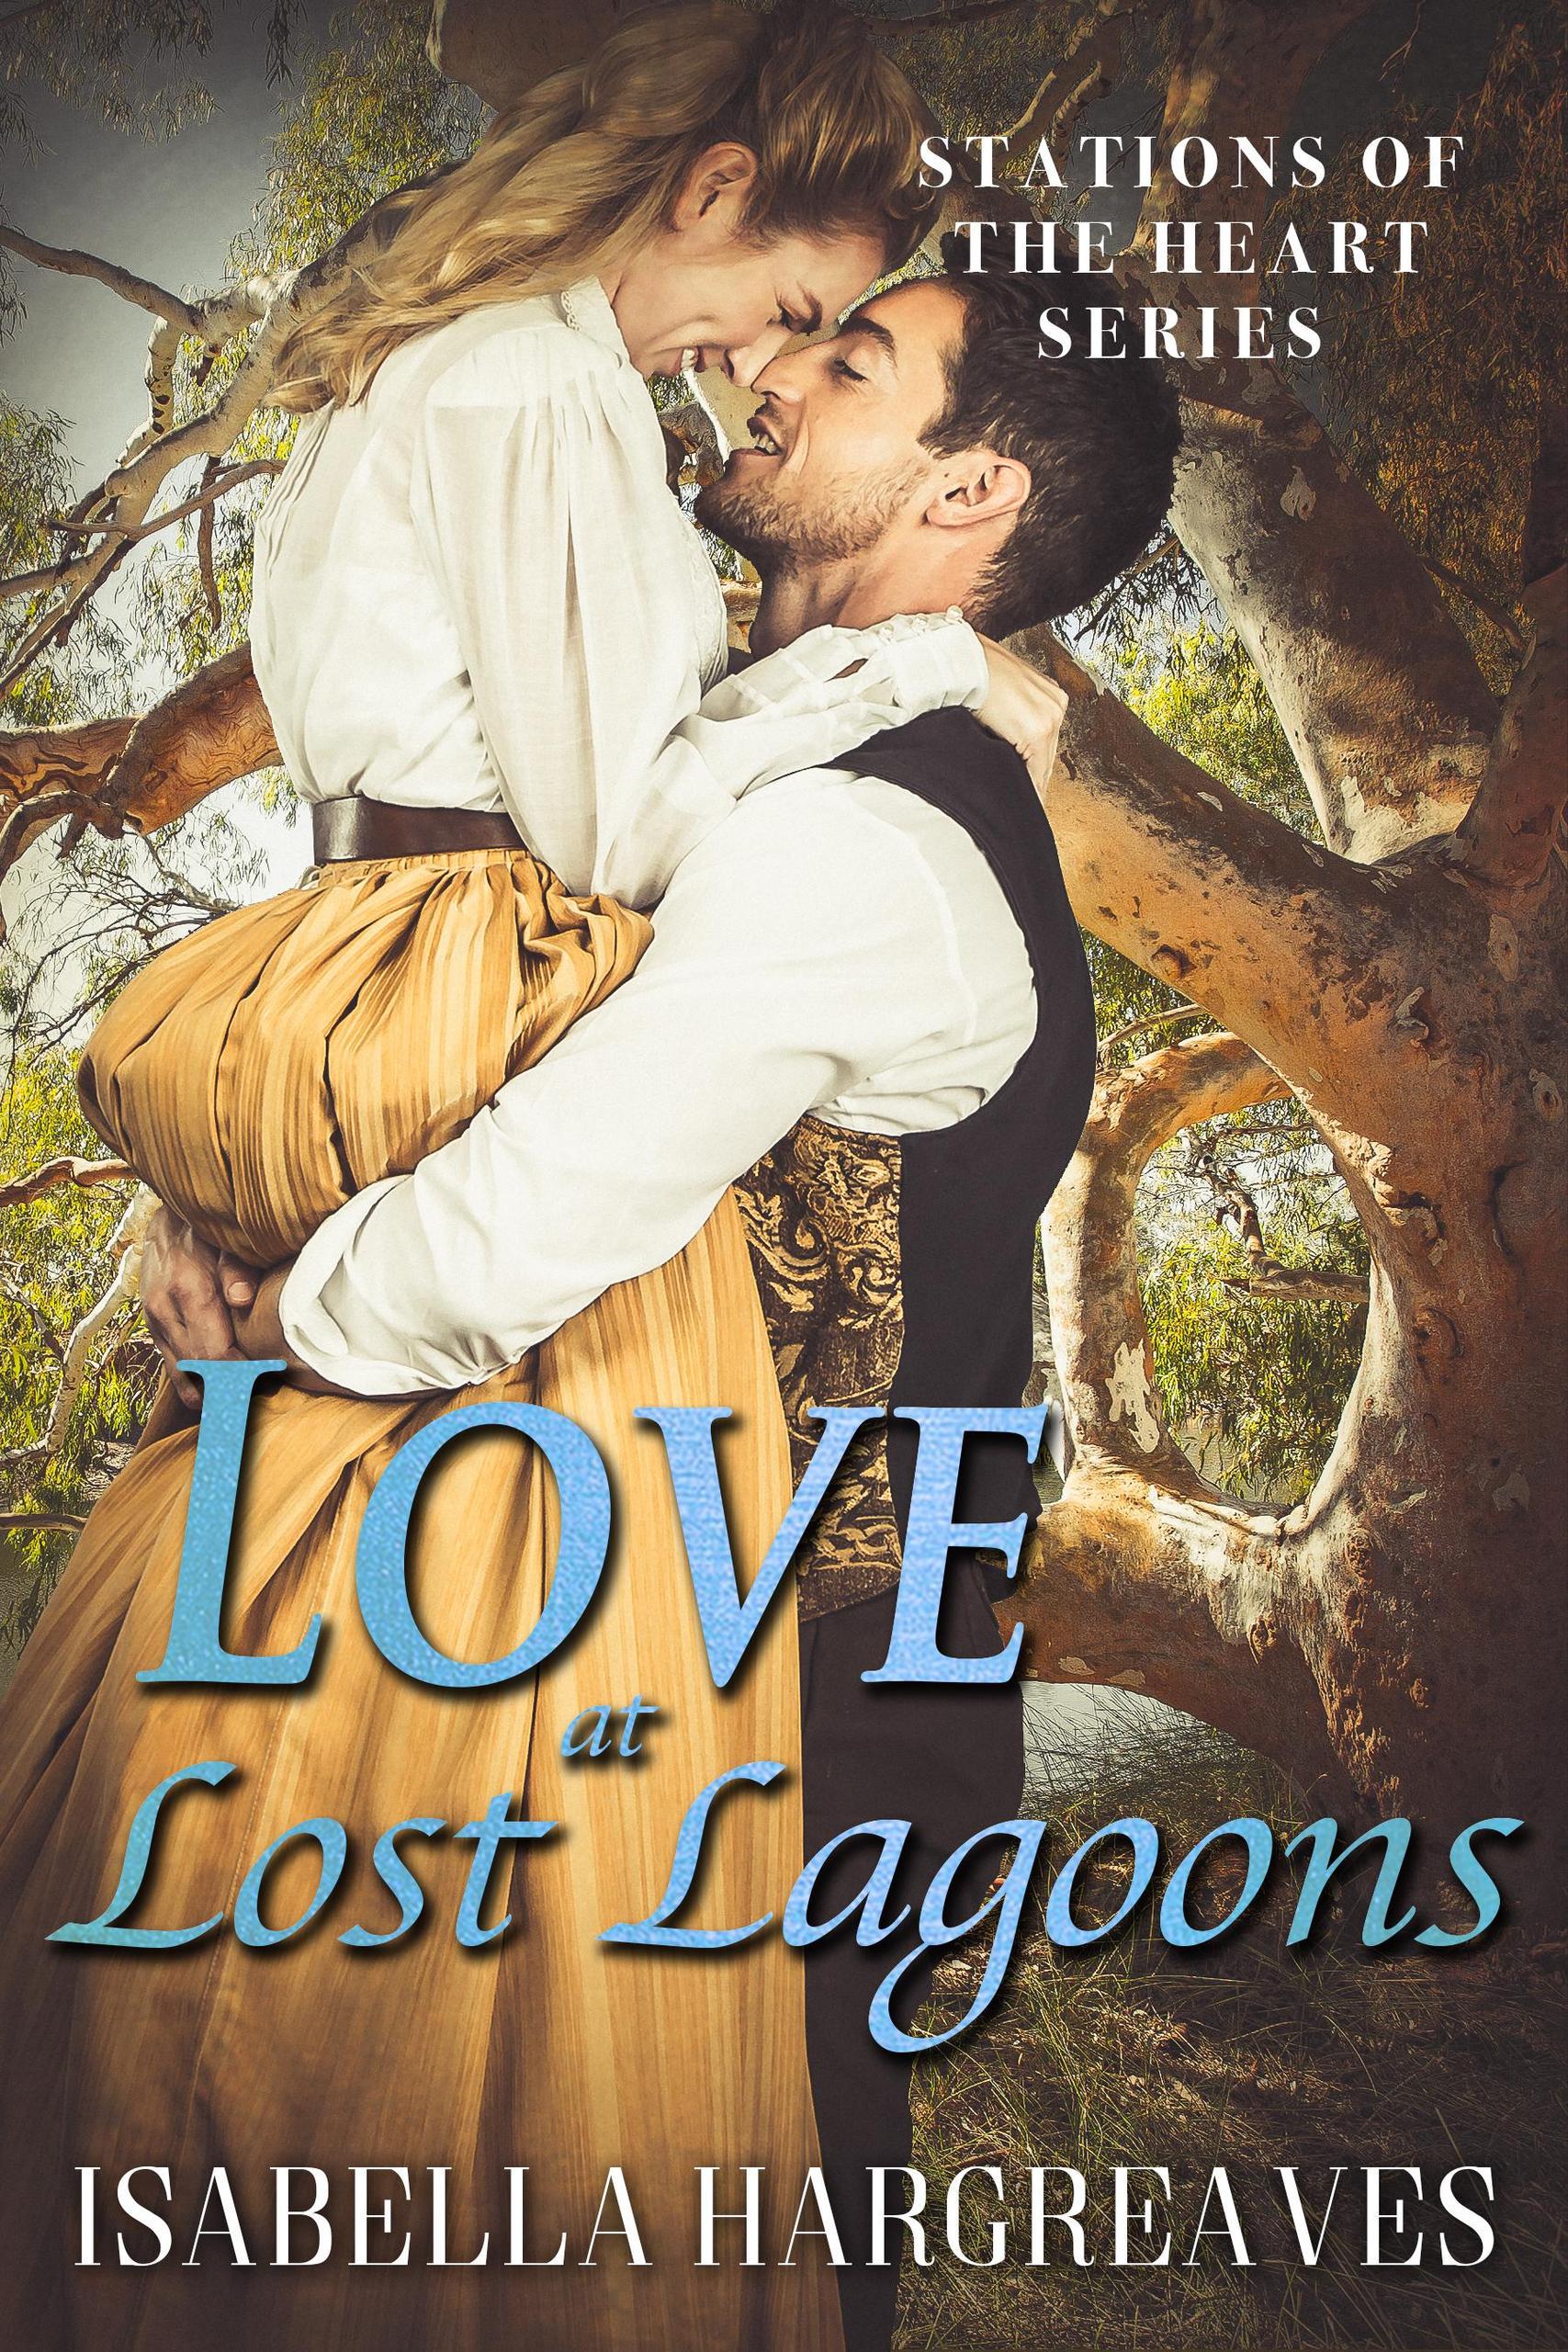 Love at Lost Lagoons by Isabella Hargreaves